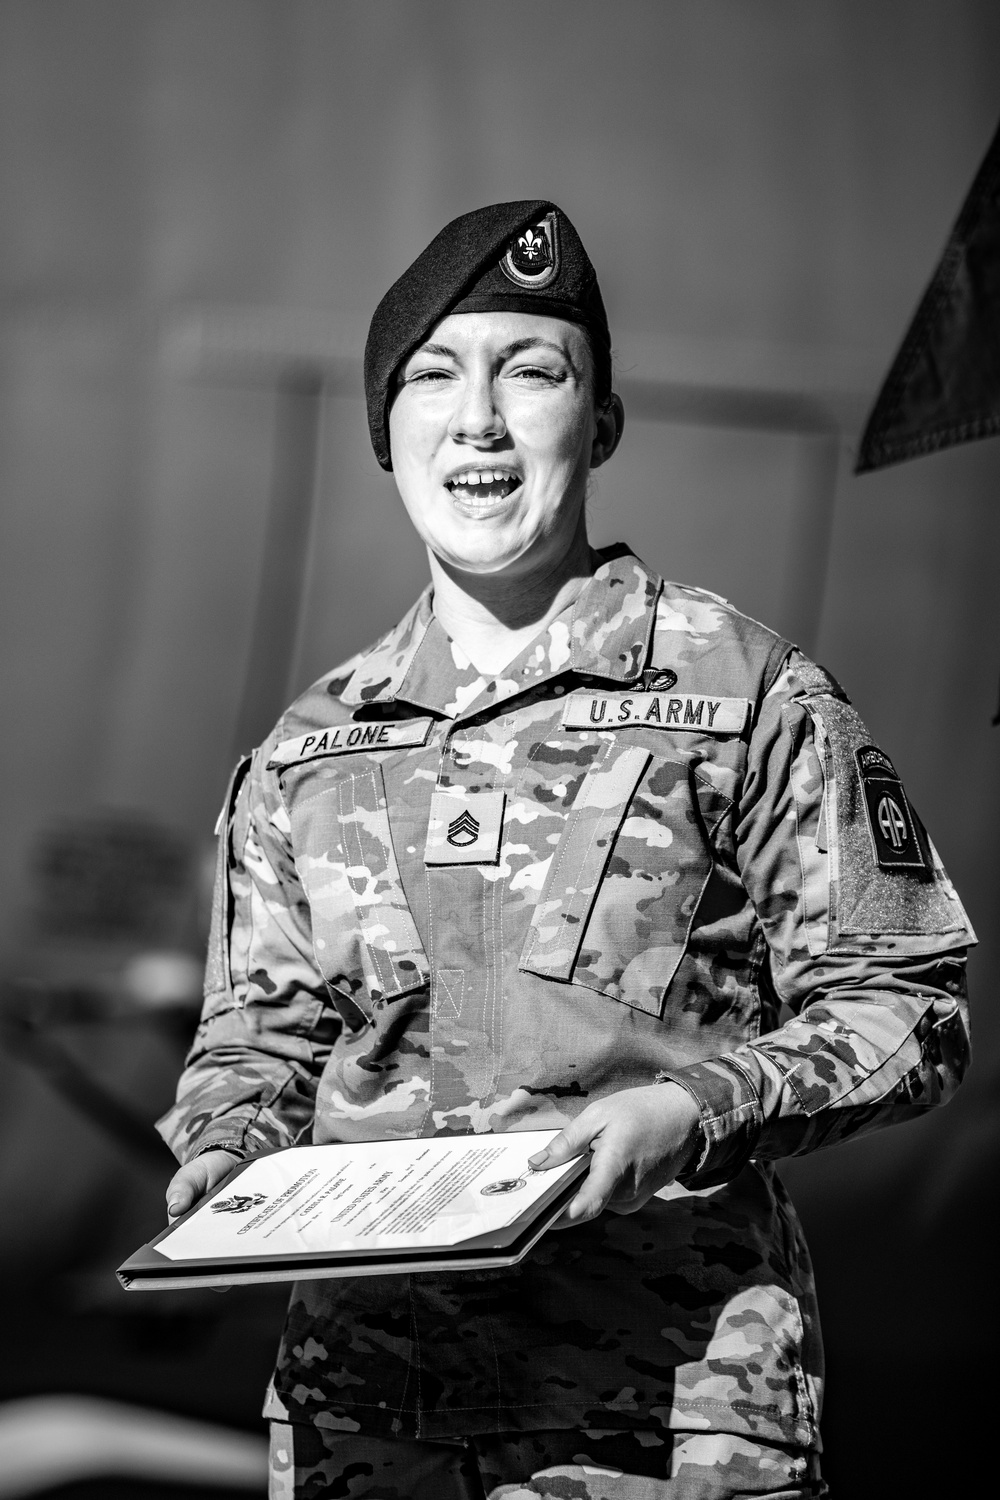 DVIDS Images Staff Sergeant Catessa Palone Promotion [Image 2 of 11]